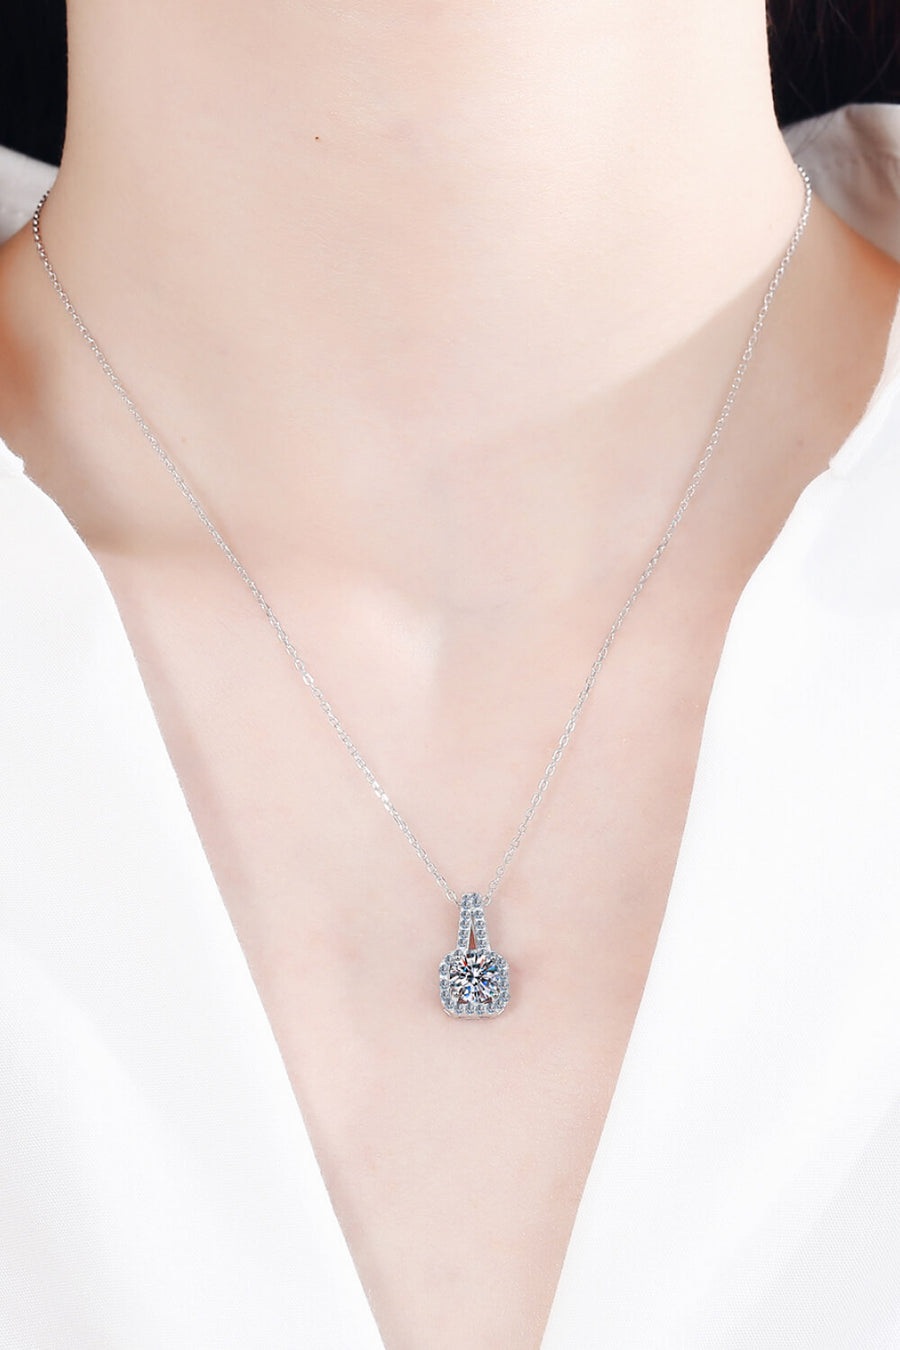 Best Diamond Necklace Jewelry Gifts for Women | 2 Carat Diamond Pendant Necklace - Look Amazing | MASON New York